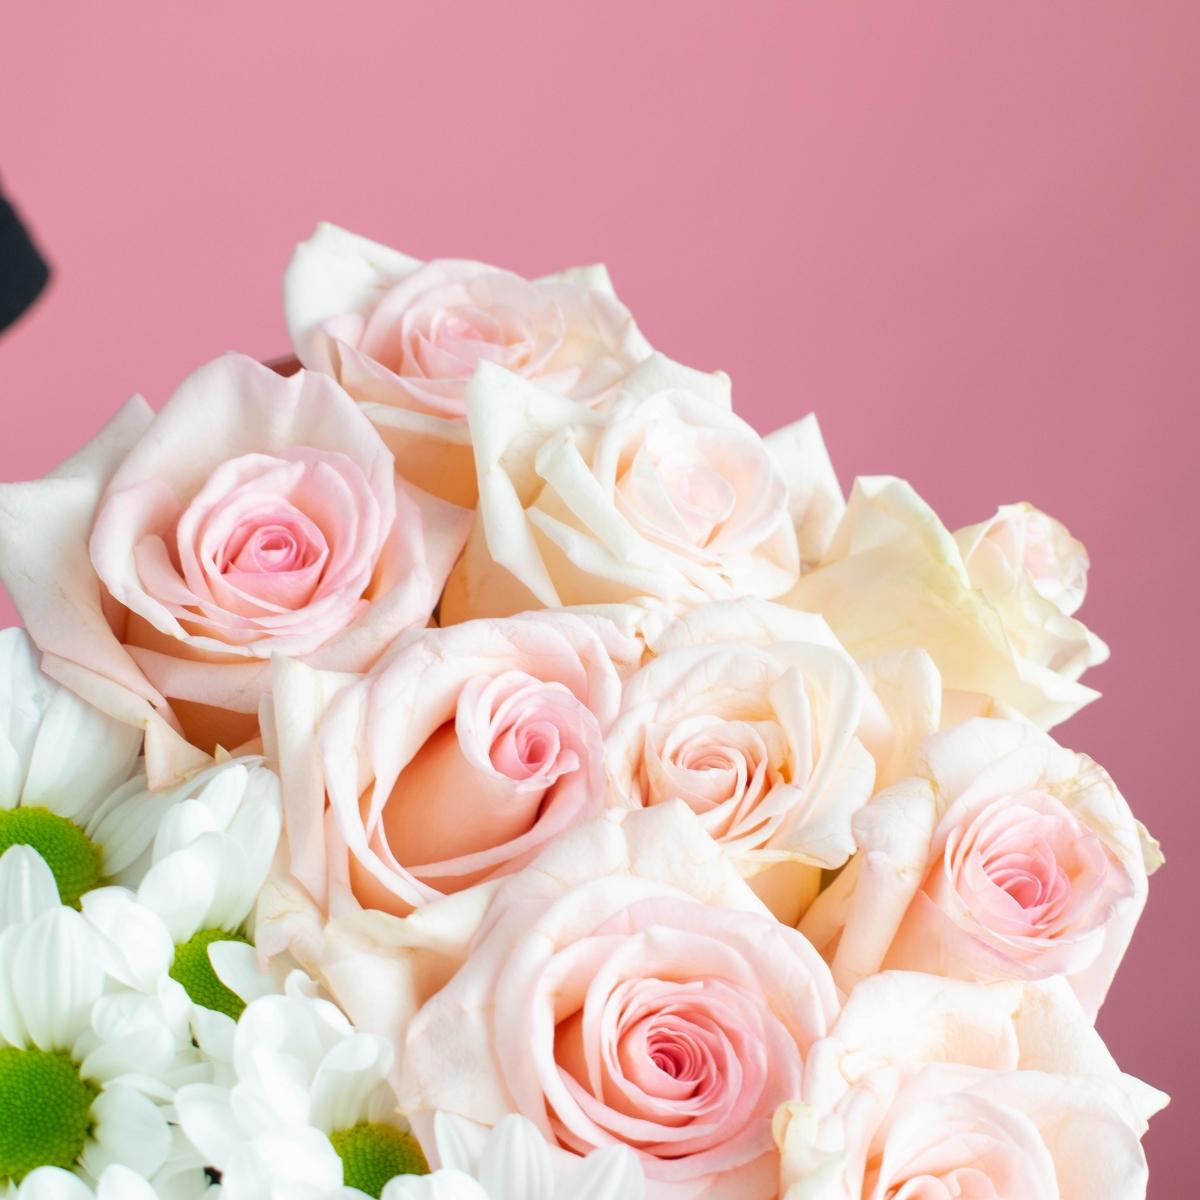 9 розовых роз с хризантемой в коробке-сердце